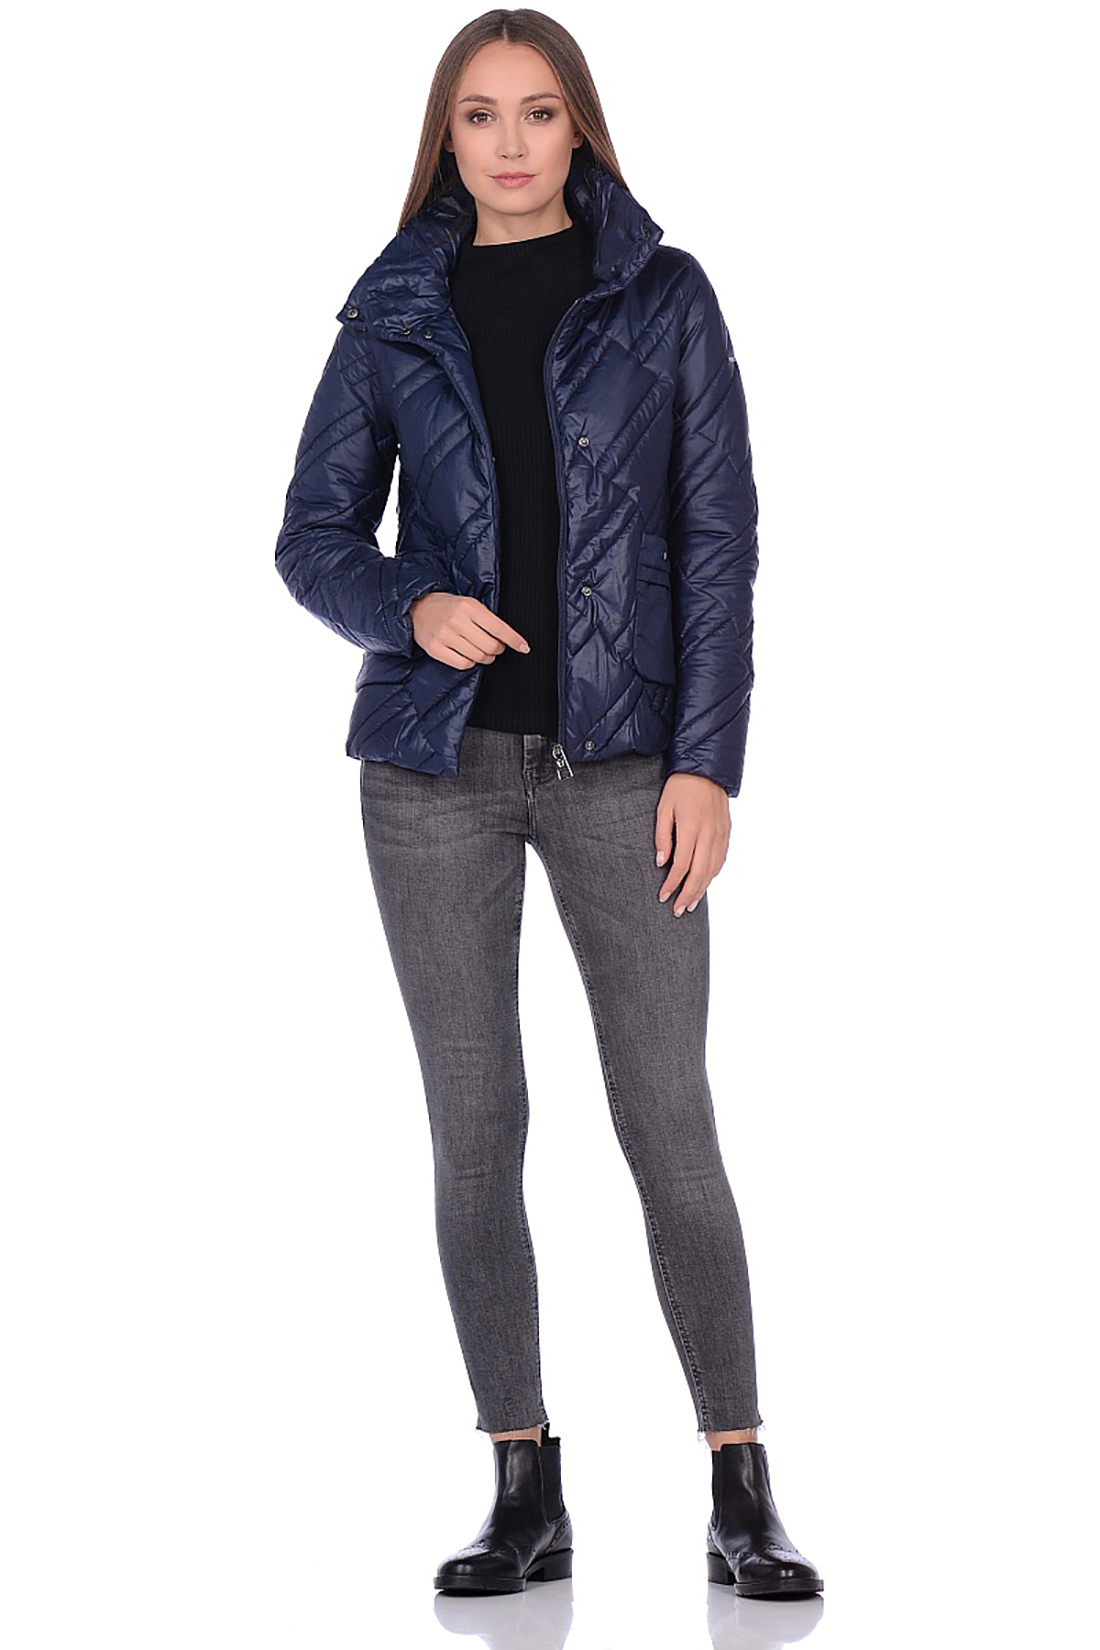 Укороченная куртка с простёжкой (арт. baon B039502), размер M, цвет синий Укороченная куртка с простёжкой (арт. baon B039502) - фото 3